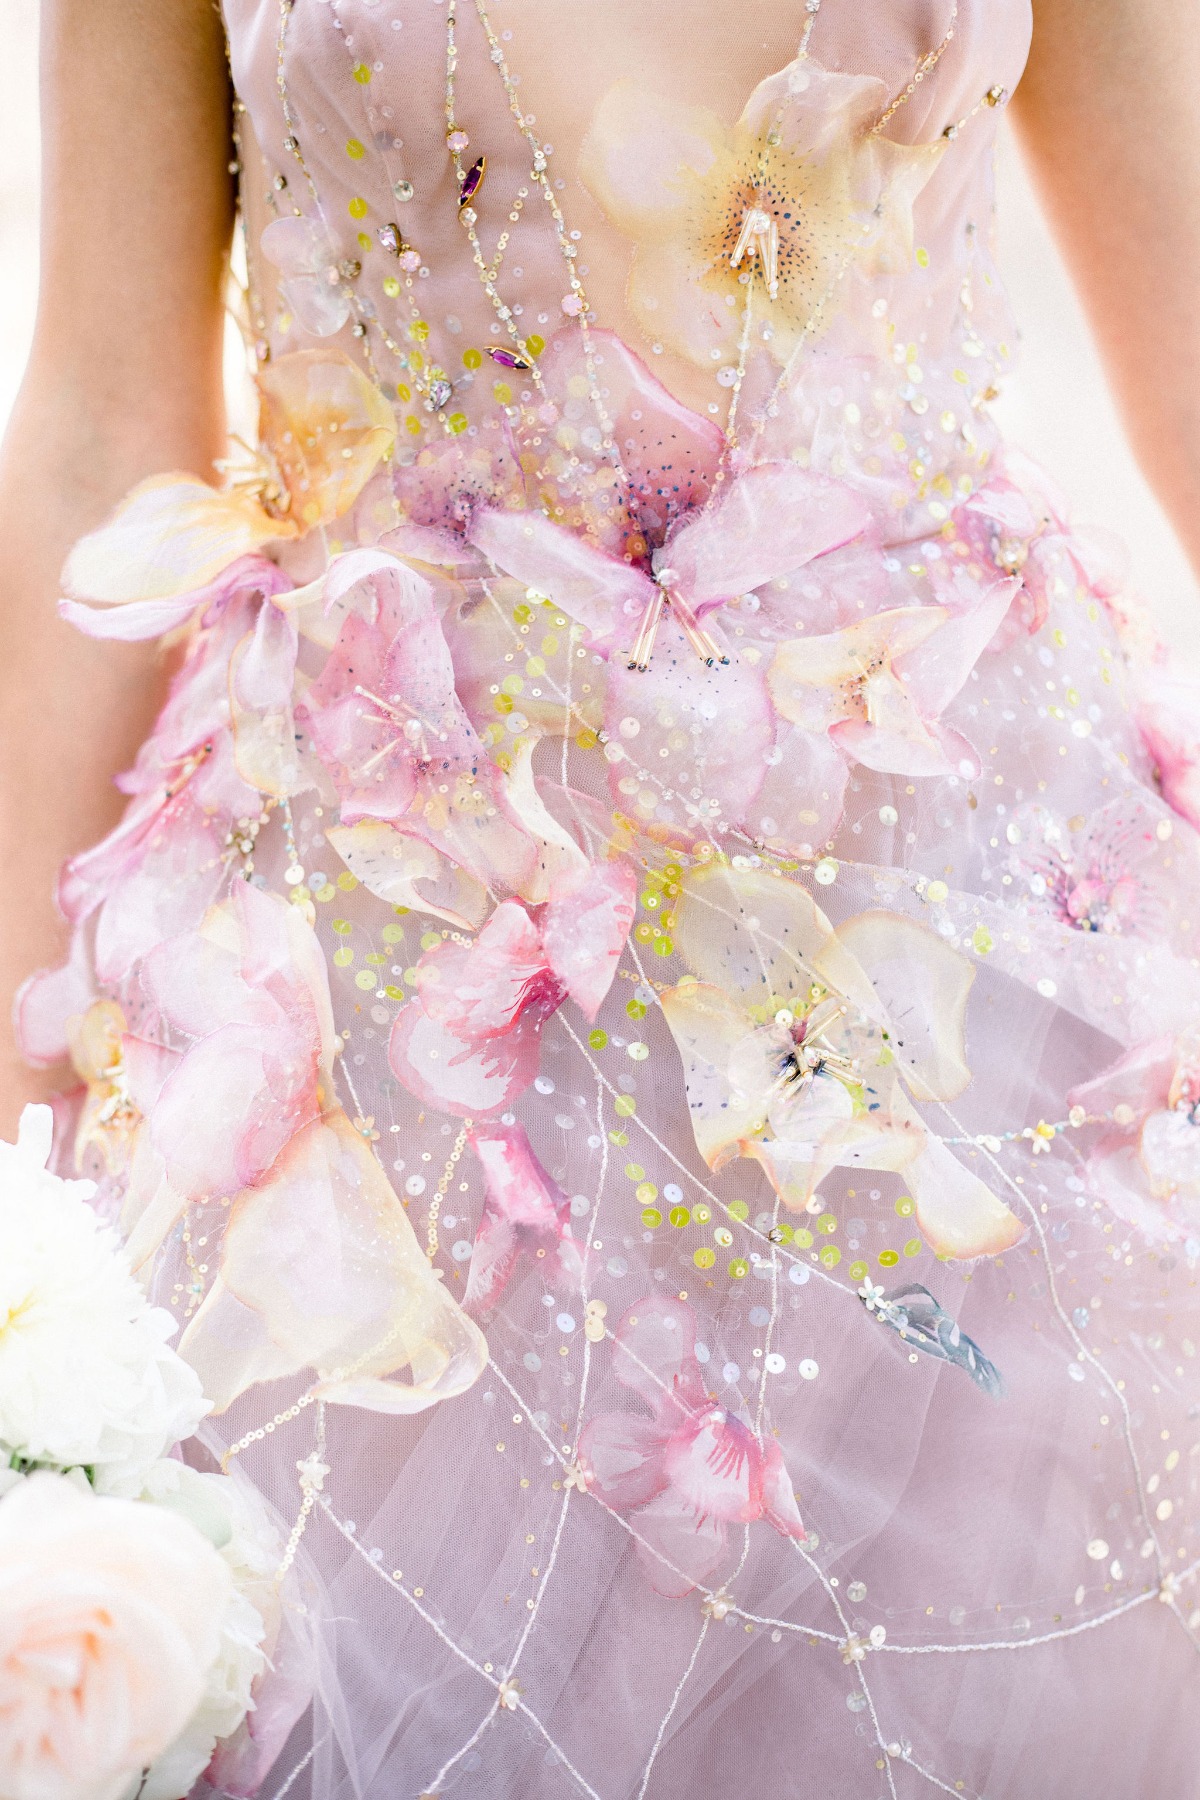 sherbert wedding dress by Myoo Couture